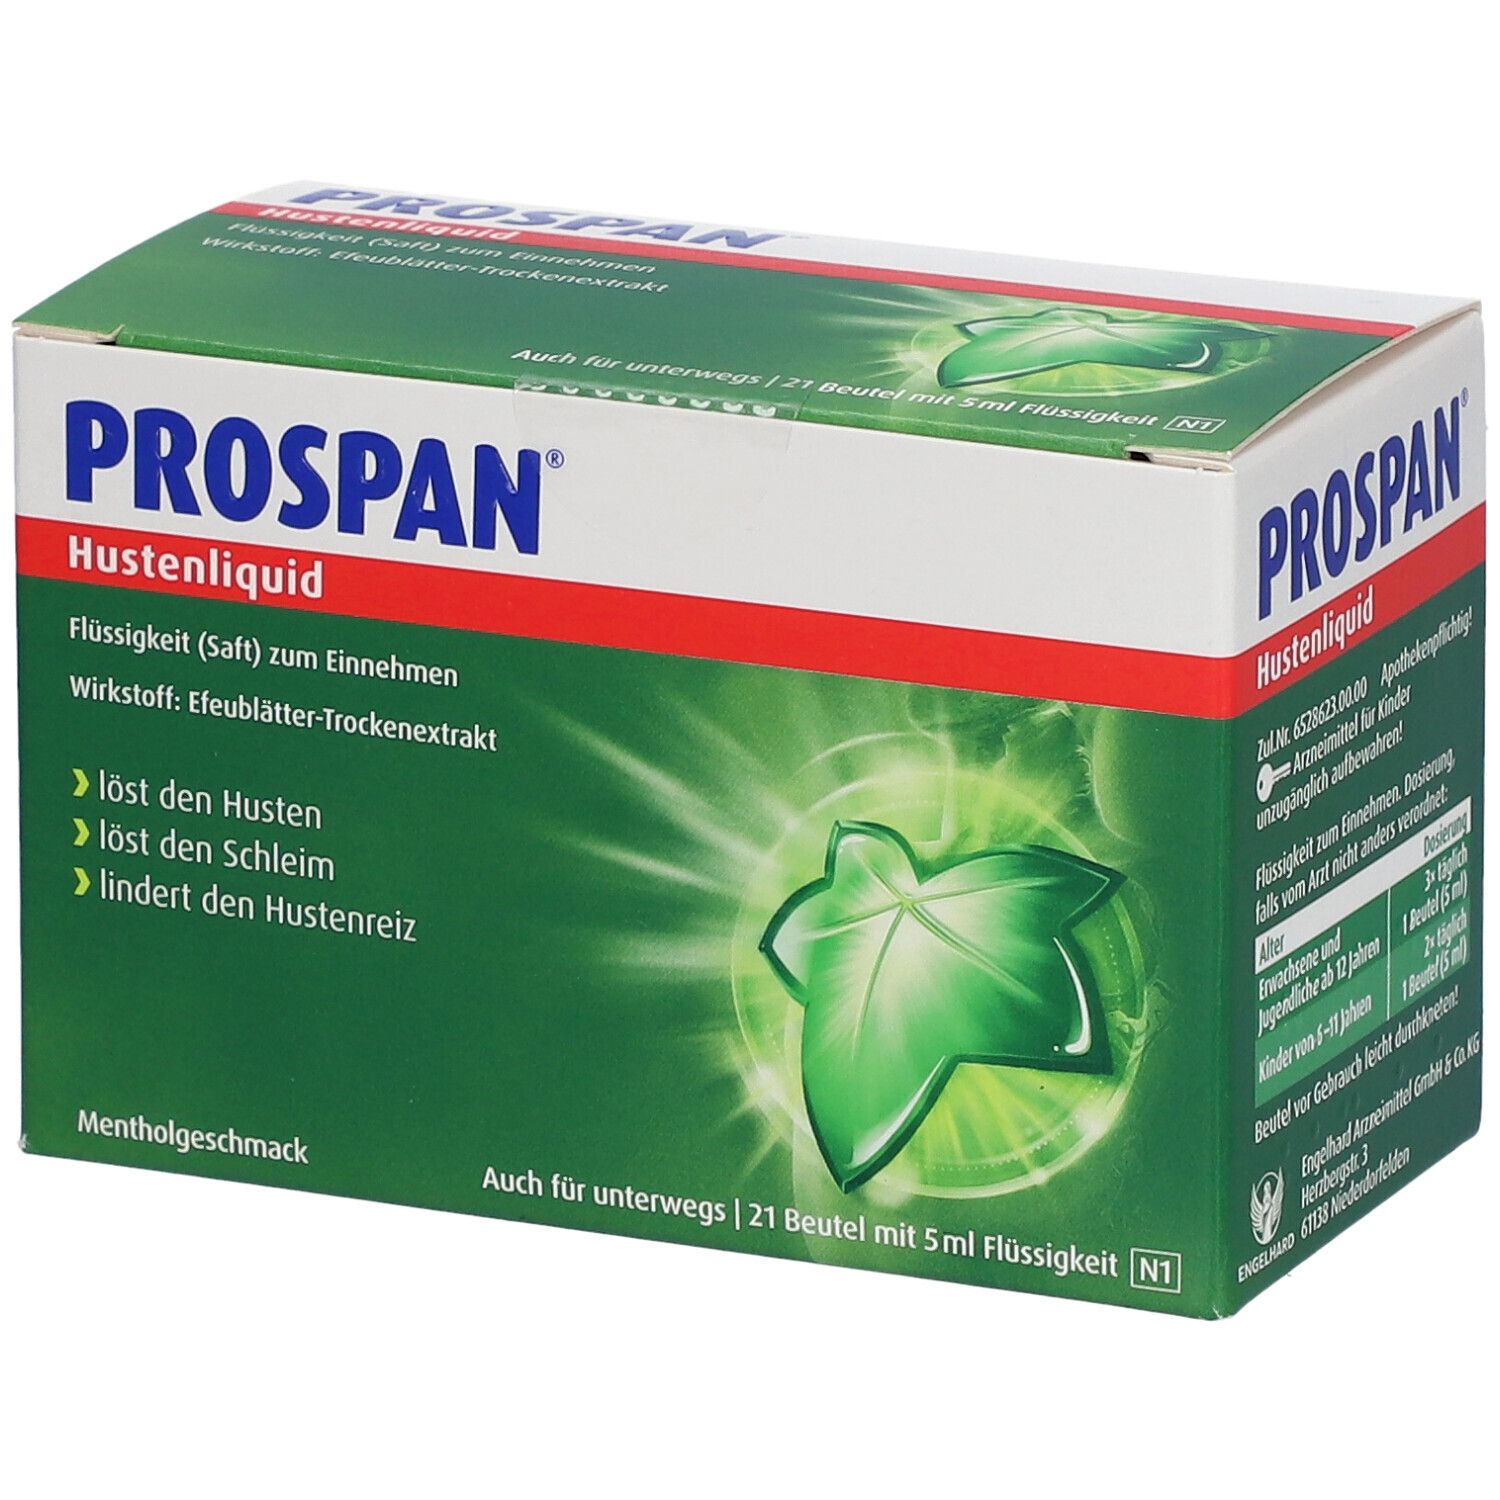 Prospan® Hustenliquid im Stickbeutel